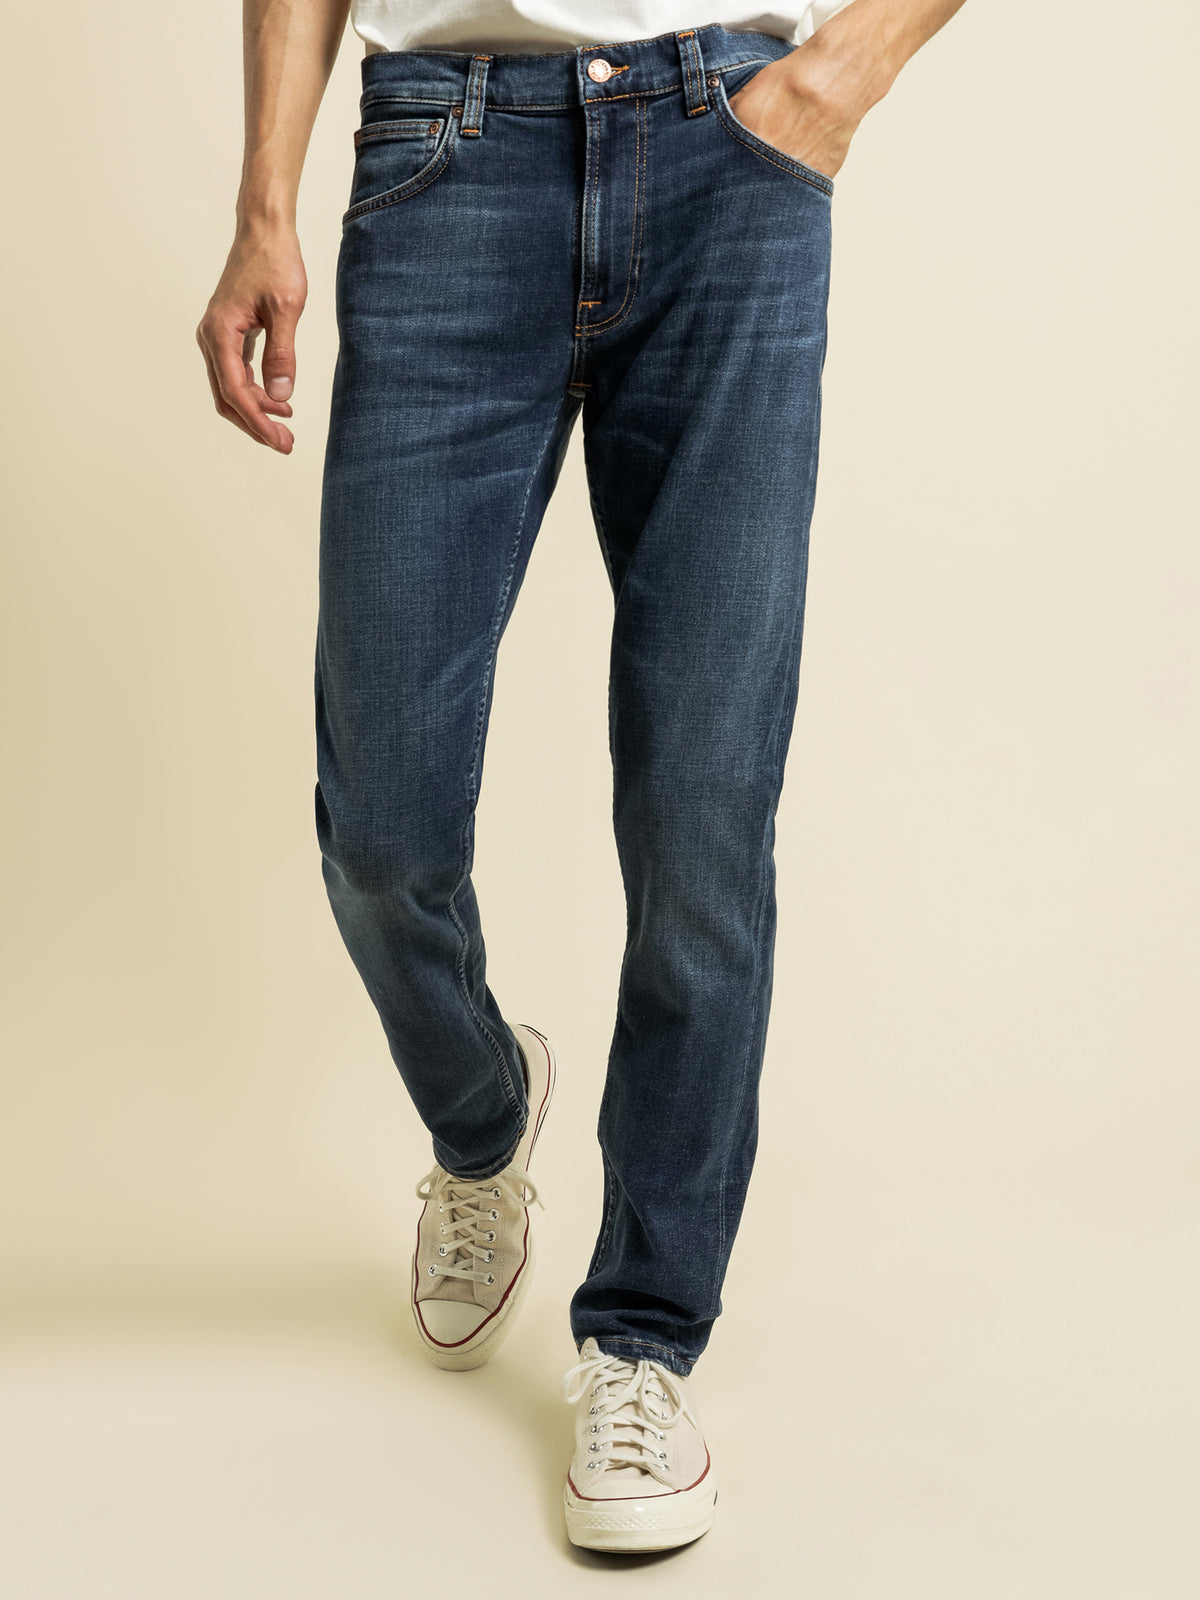 Lean Dean Jeans in Indigo Myth